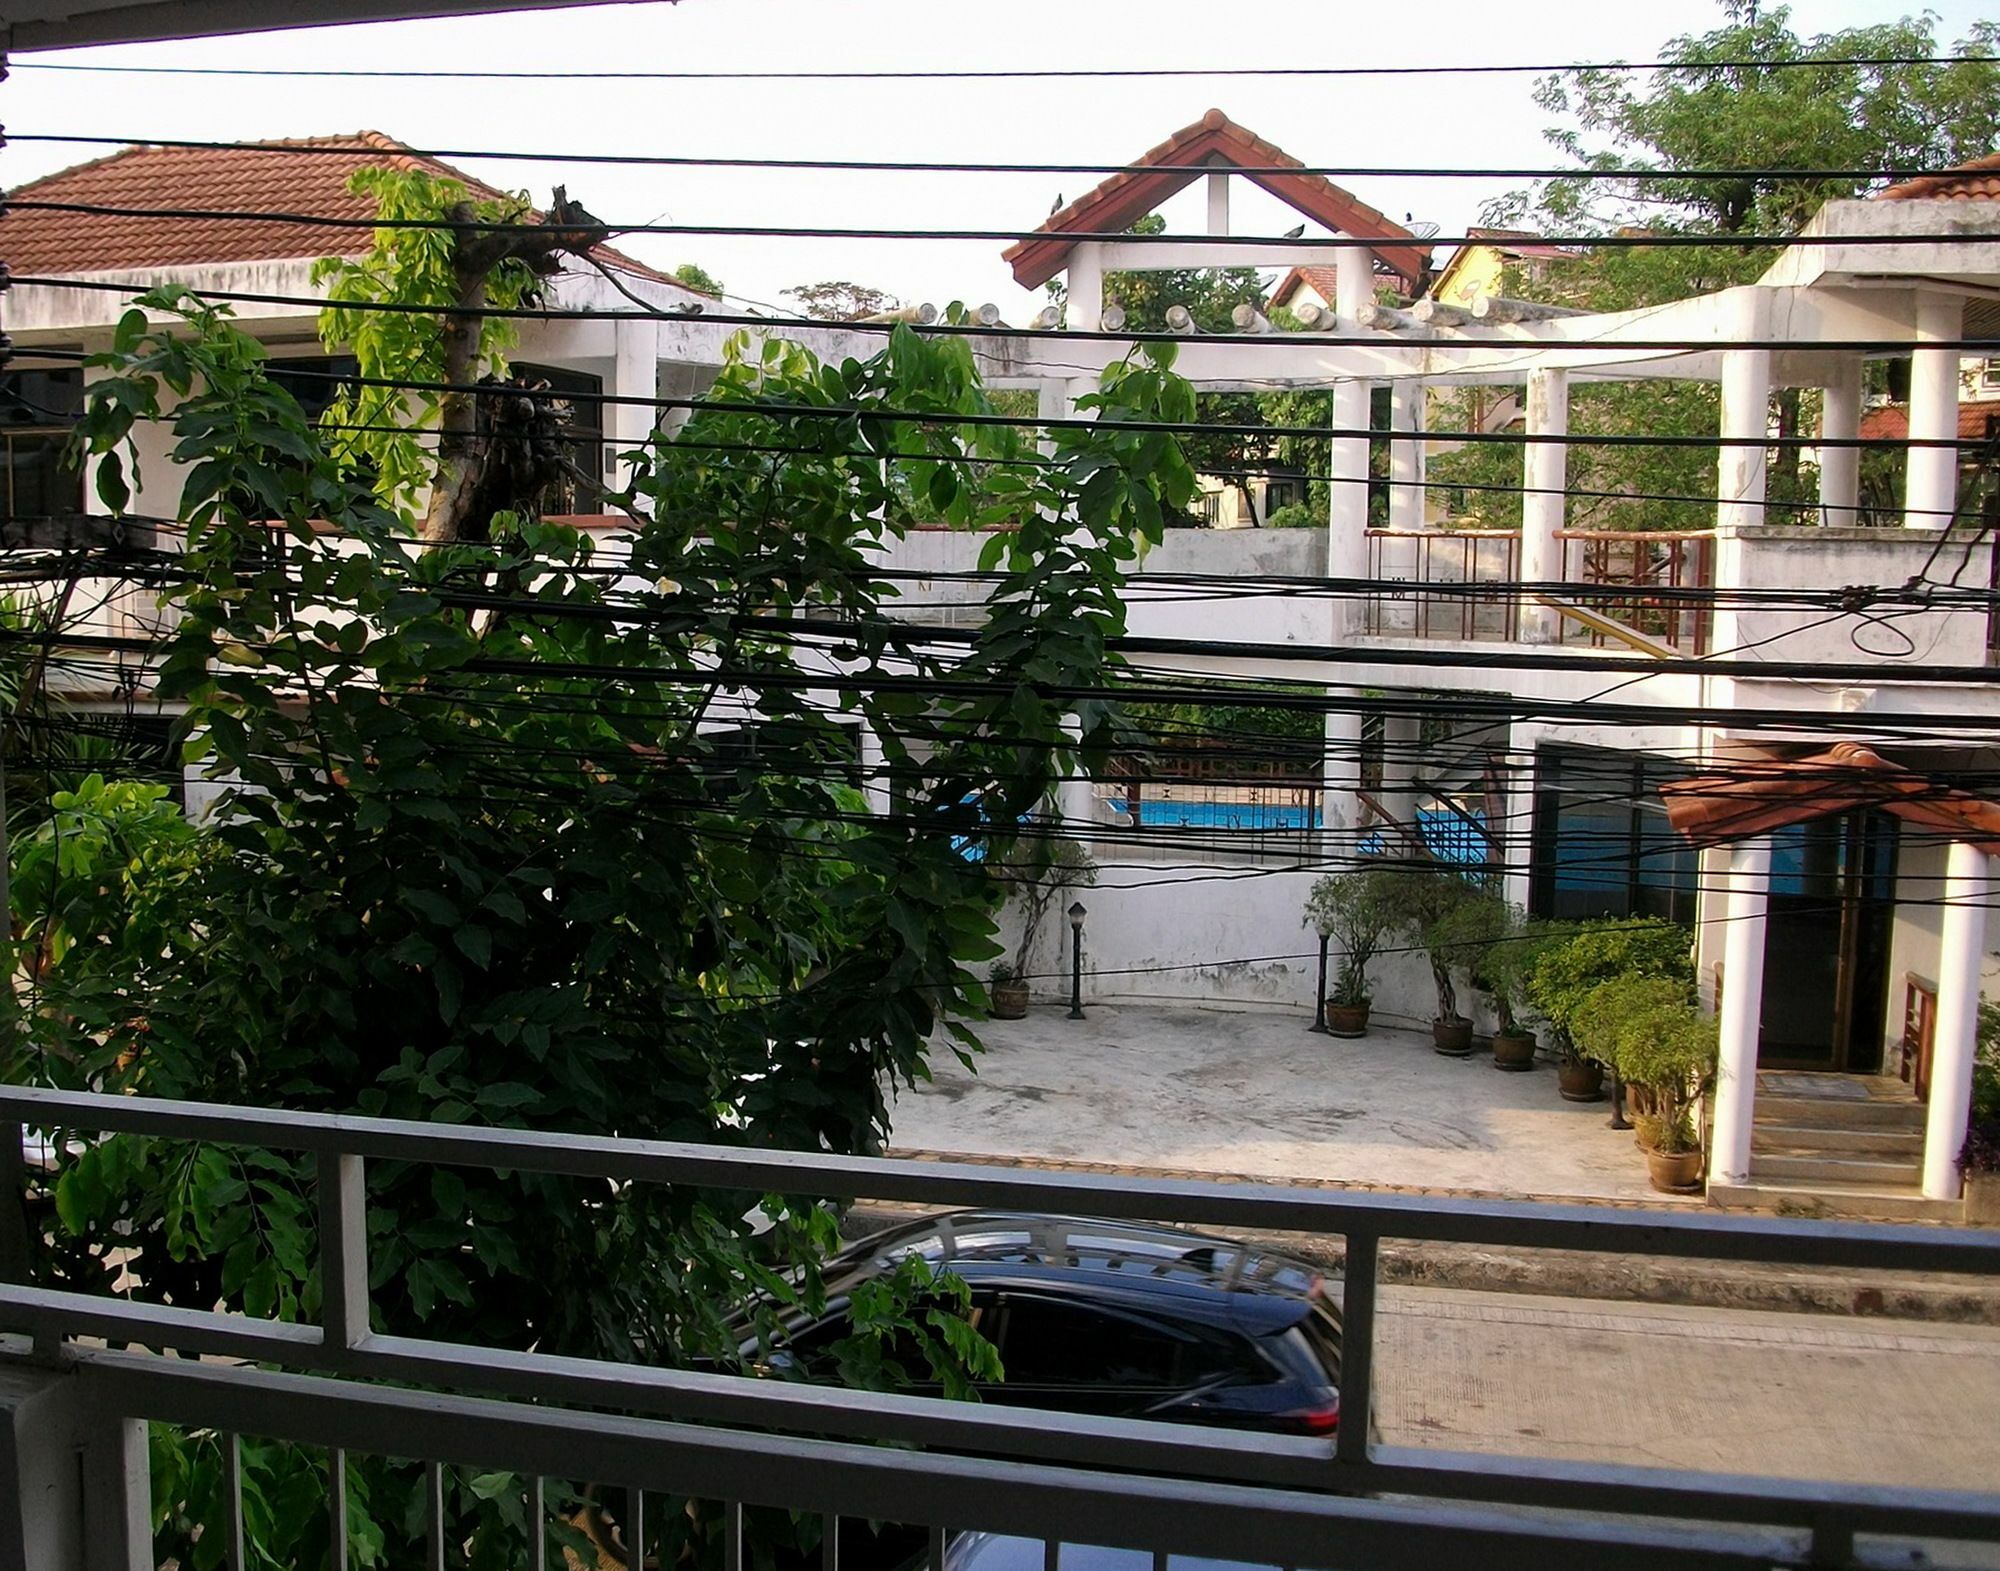 A Joy House - Kaset Nawamin City Banguecoque Exterior foto